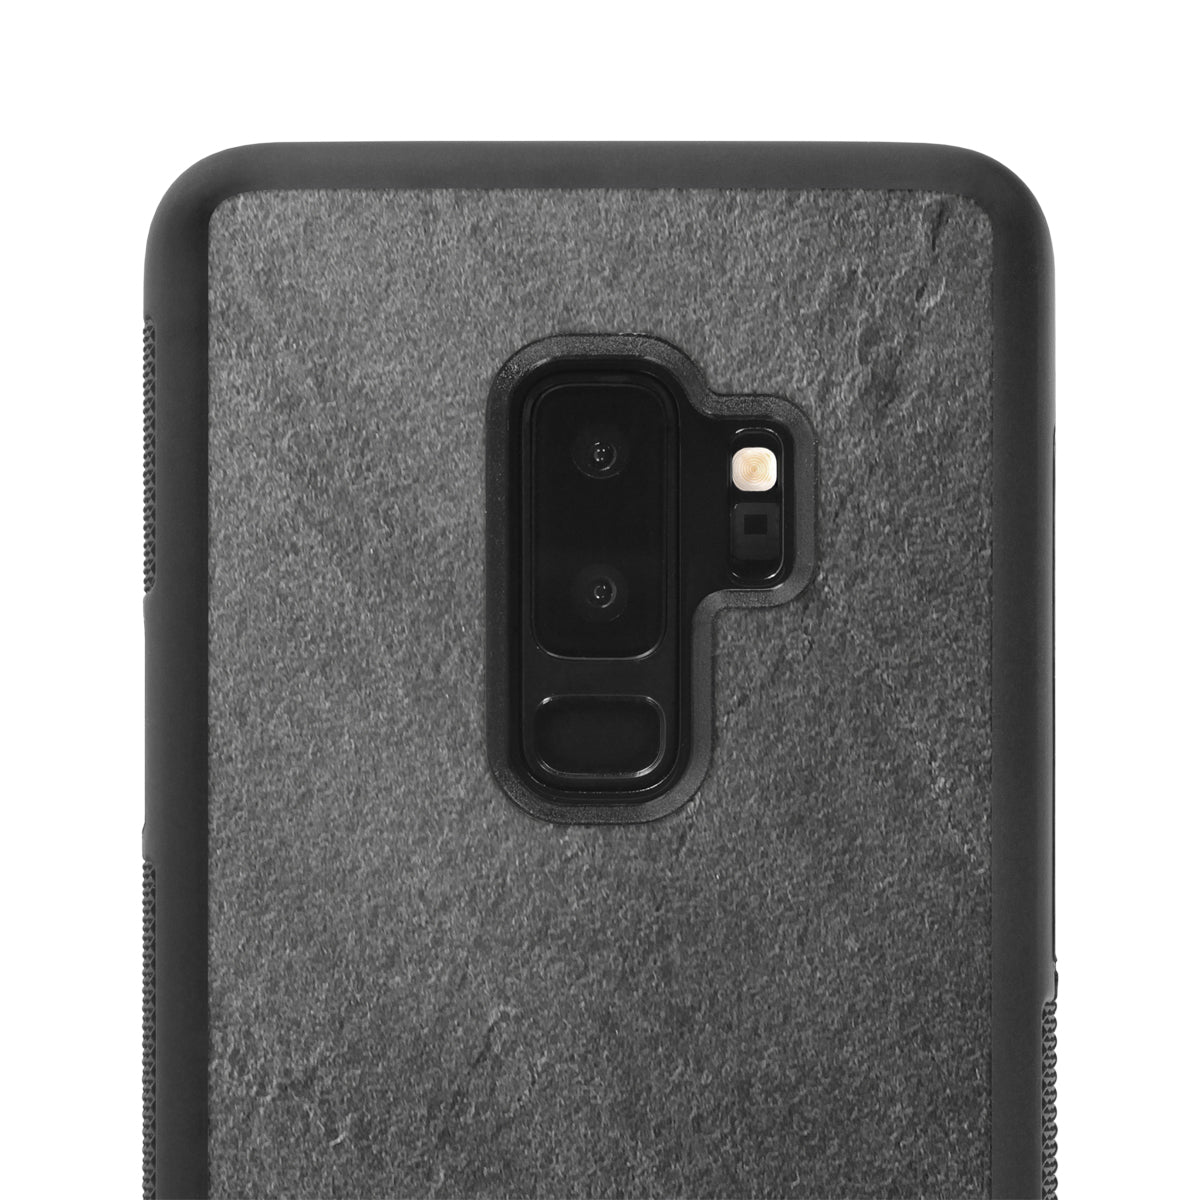 Samsung Galaxy S9 Plus —  Stone Explorer Case